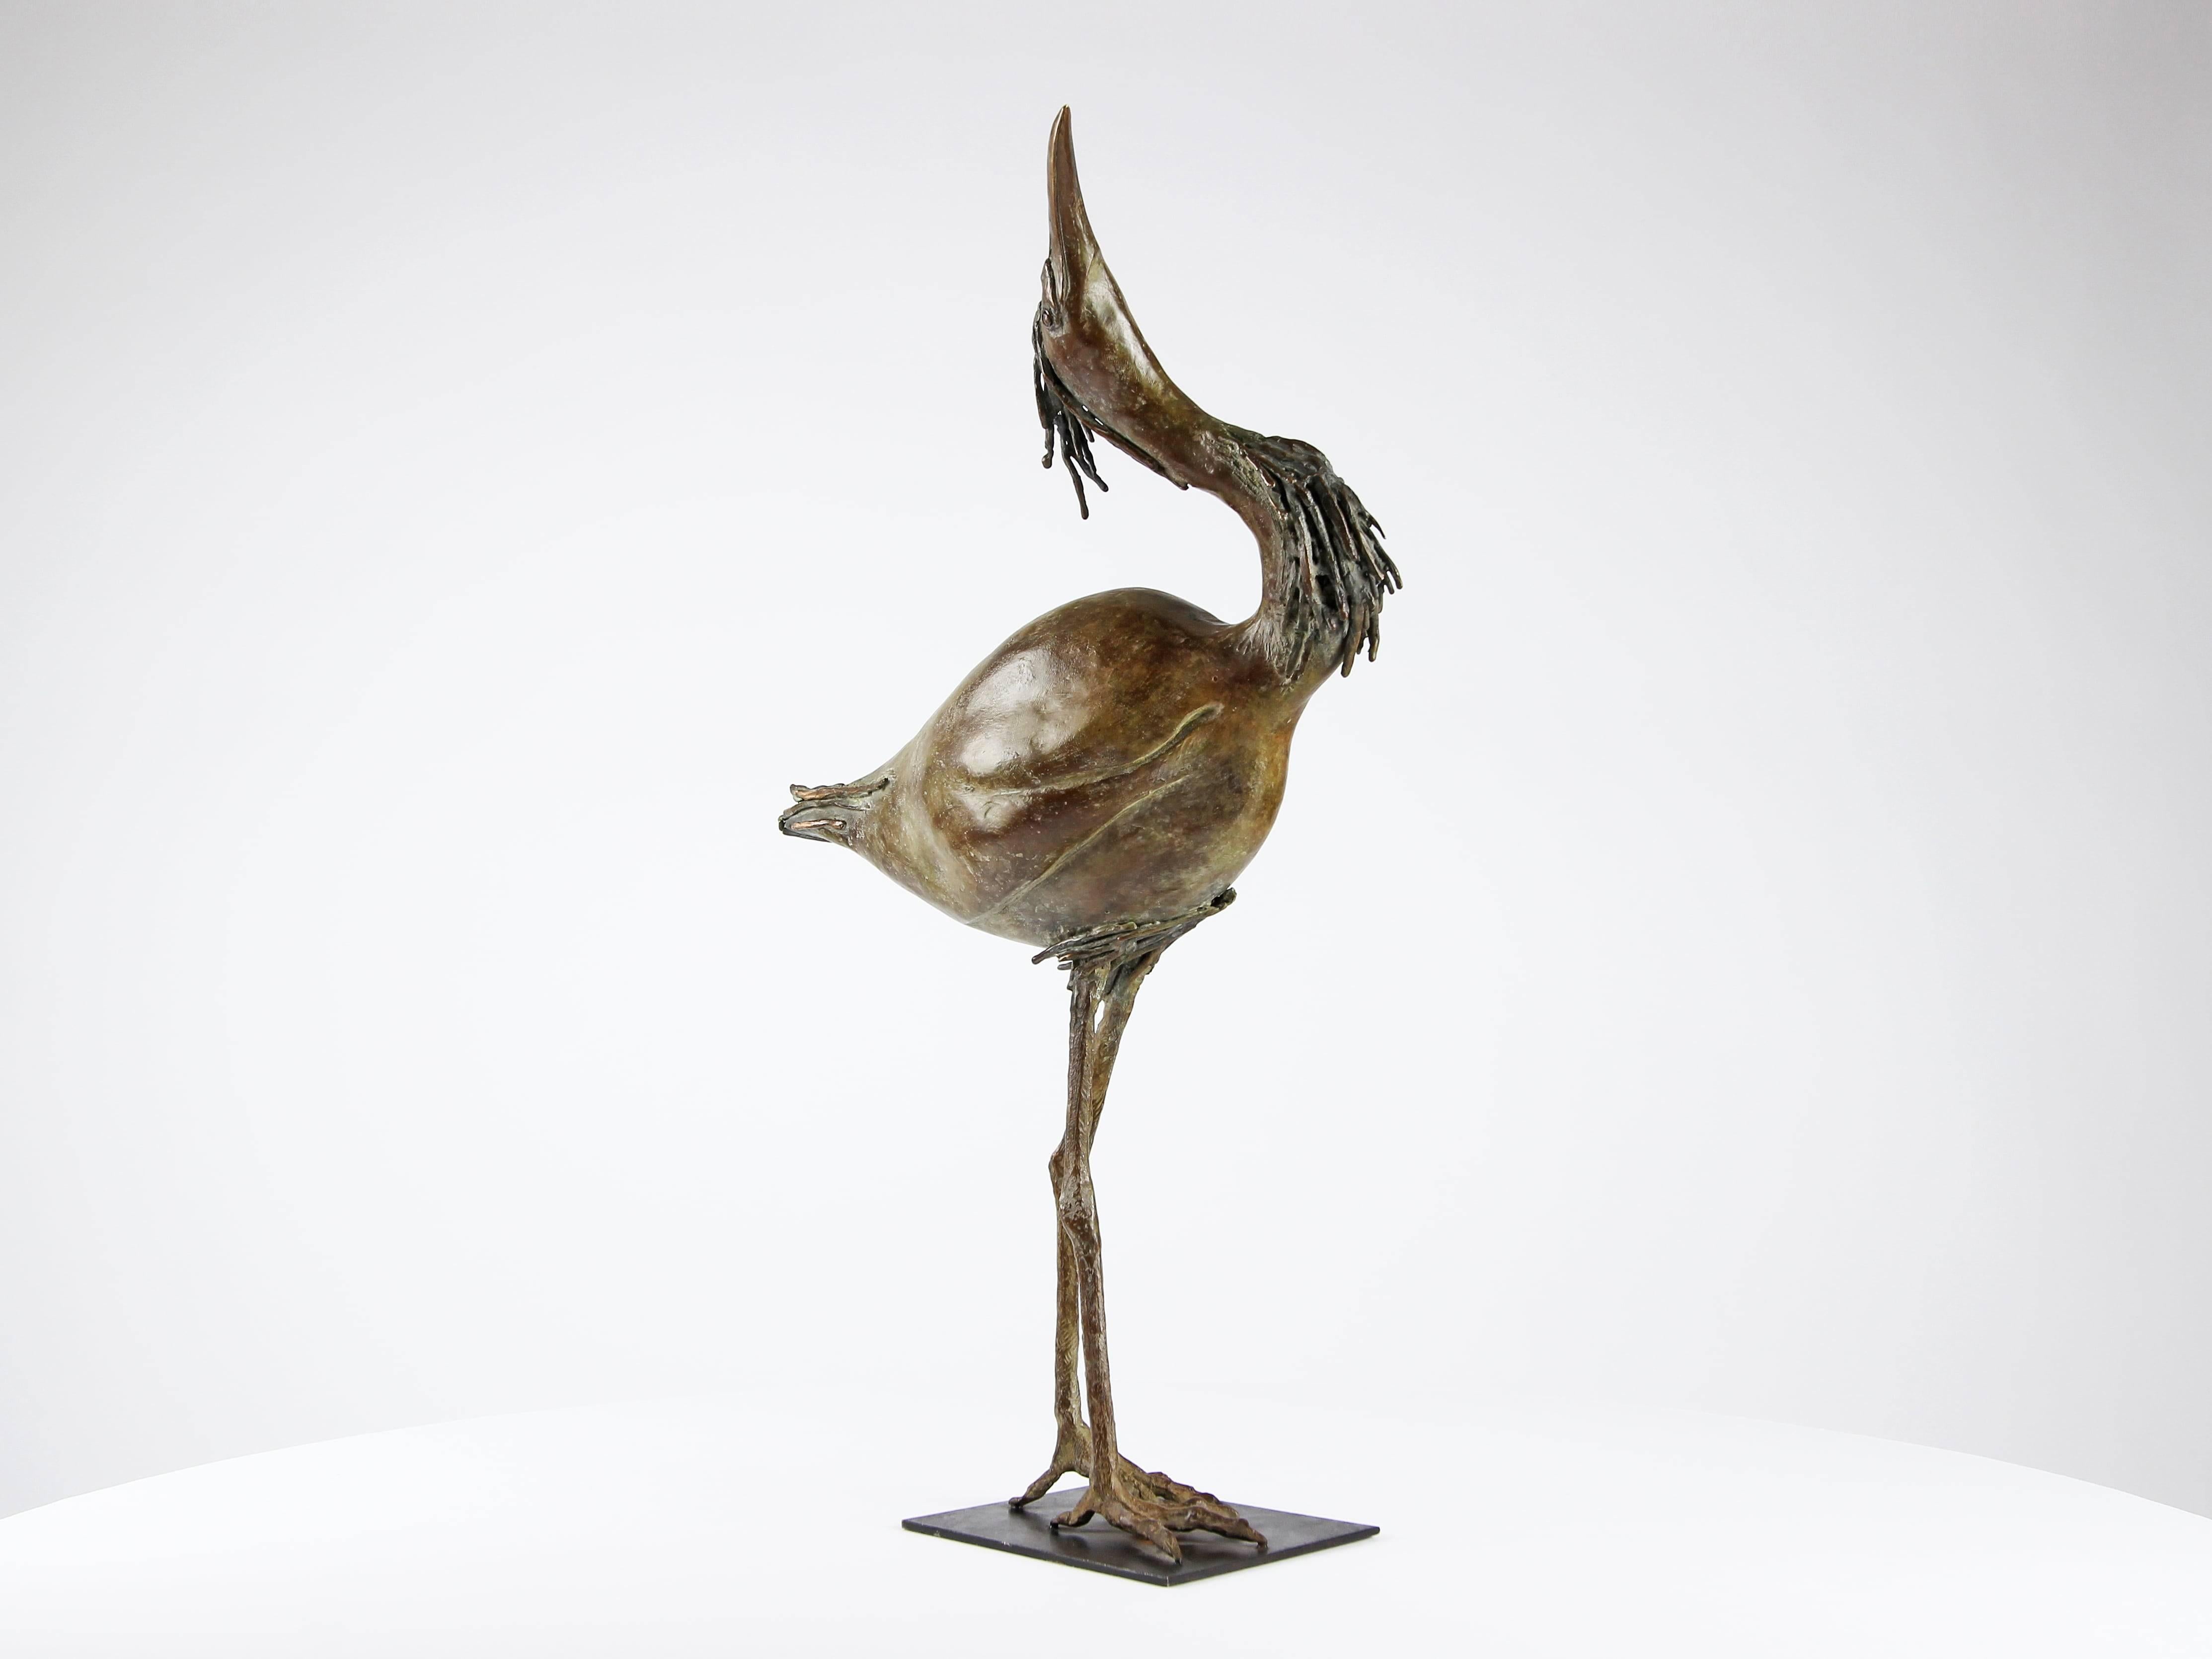 Egret by Chésade - Escultura animal en bronce de un ave, realista, expresiva en venta 2